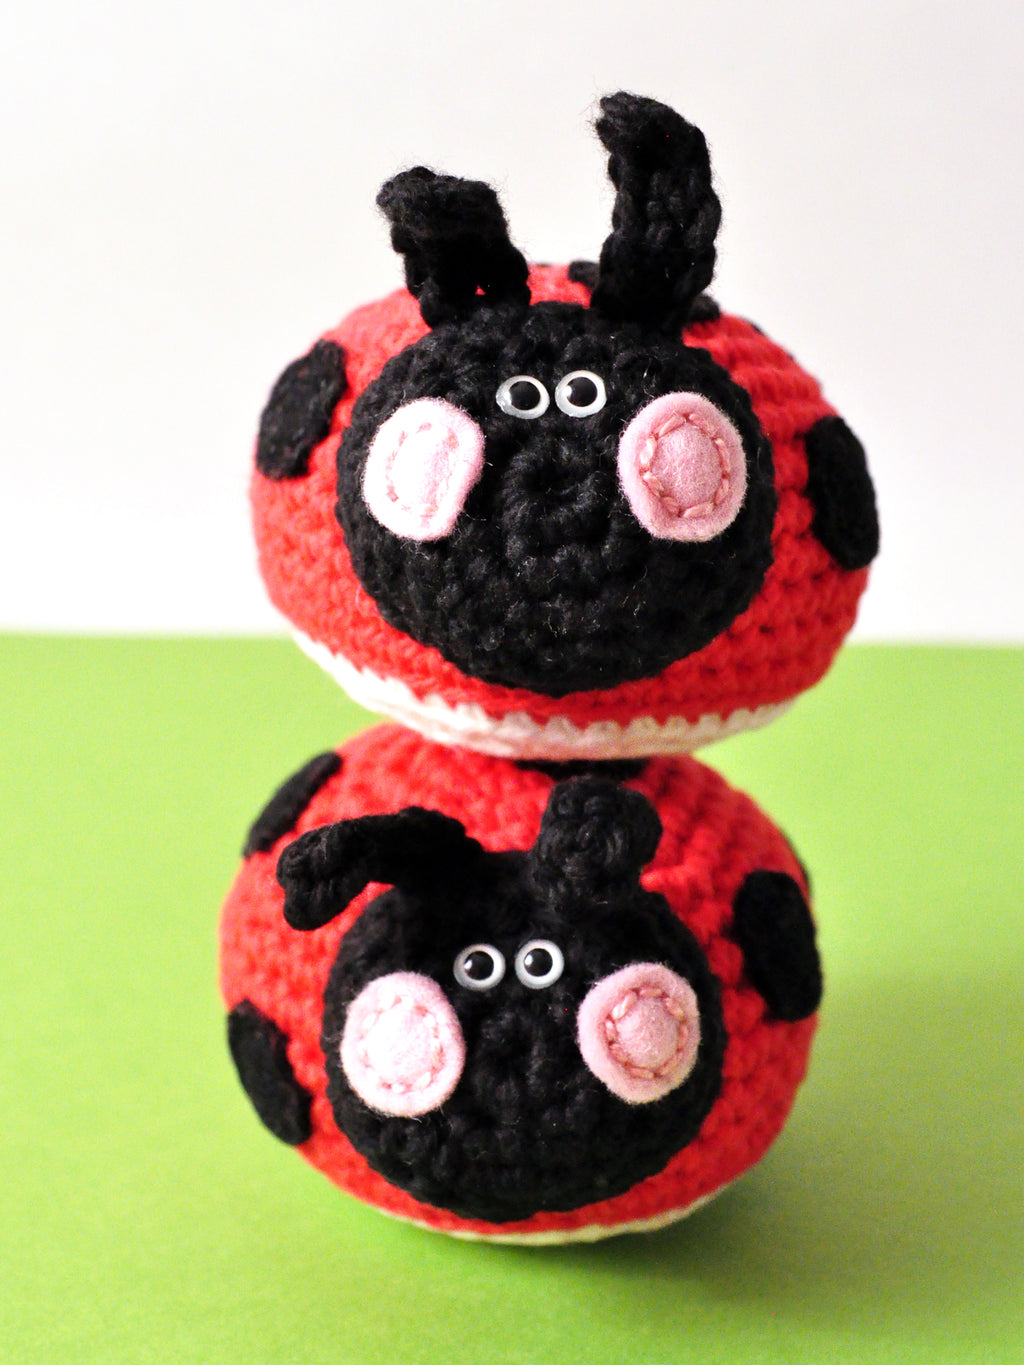 Ladybug crochet pattern from Happy-Gurumi, a crochet book